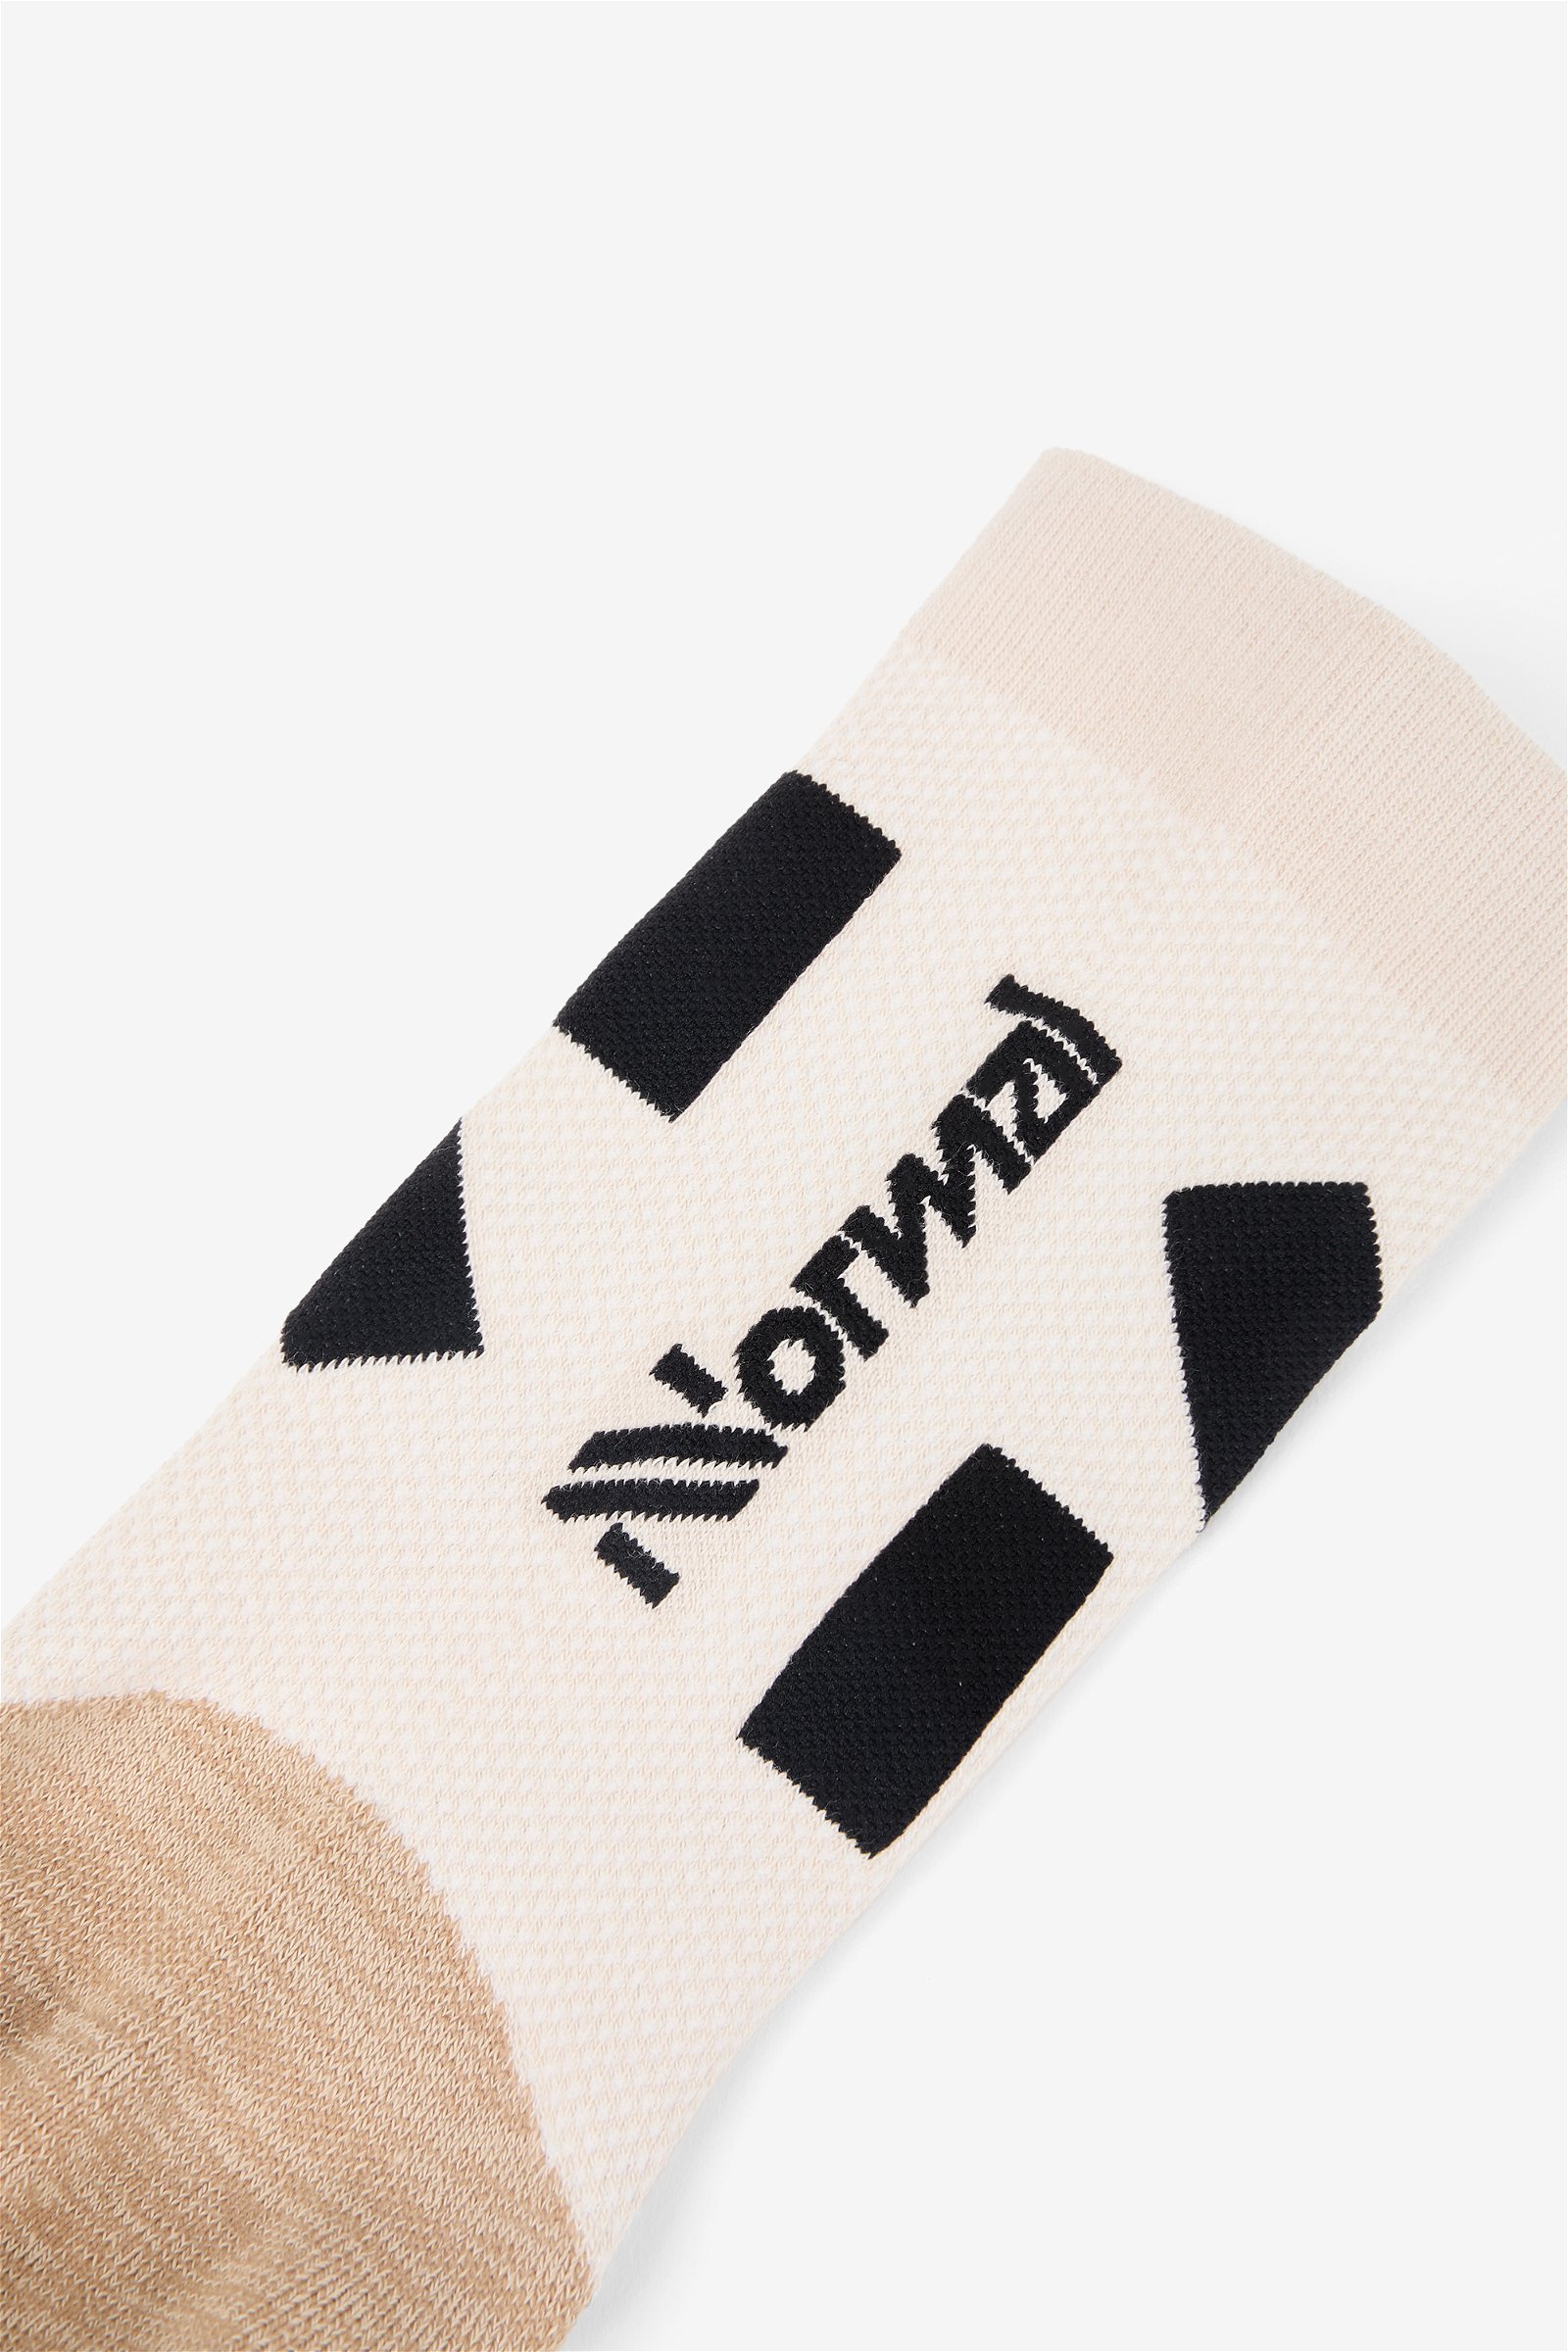 NNormal Race Sock